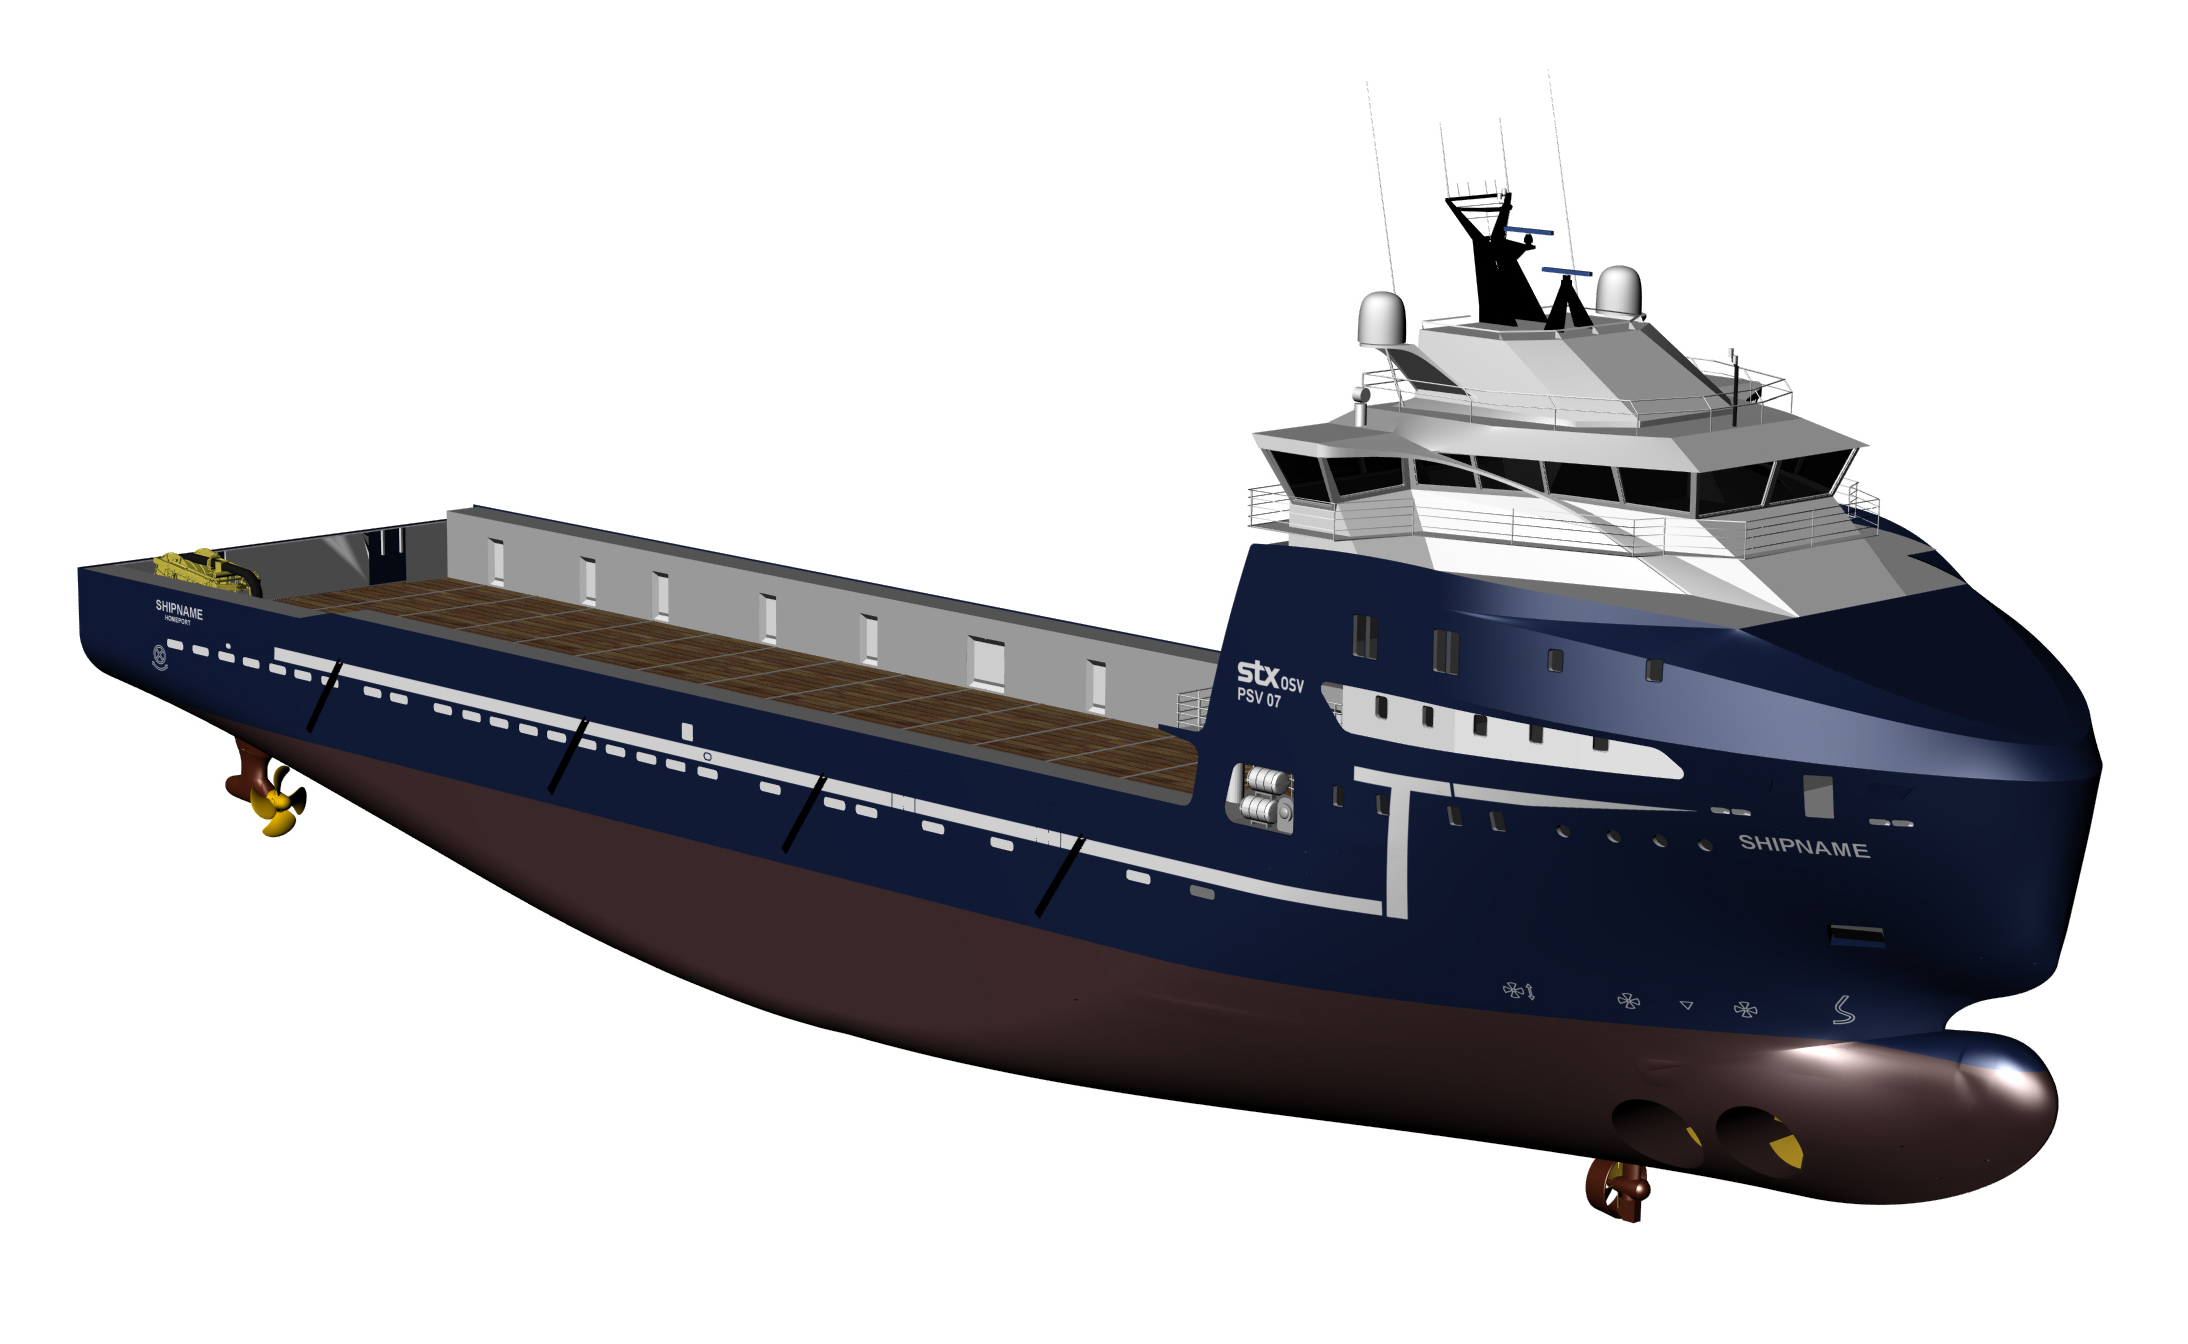 New supply vessels for Norwegian continental shelf - equinor.com